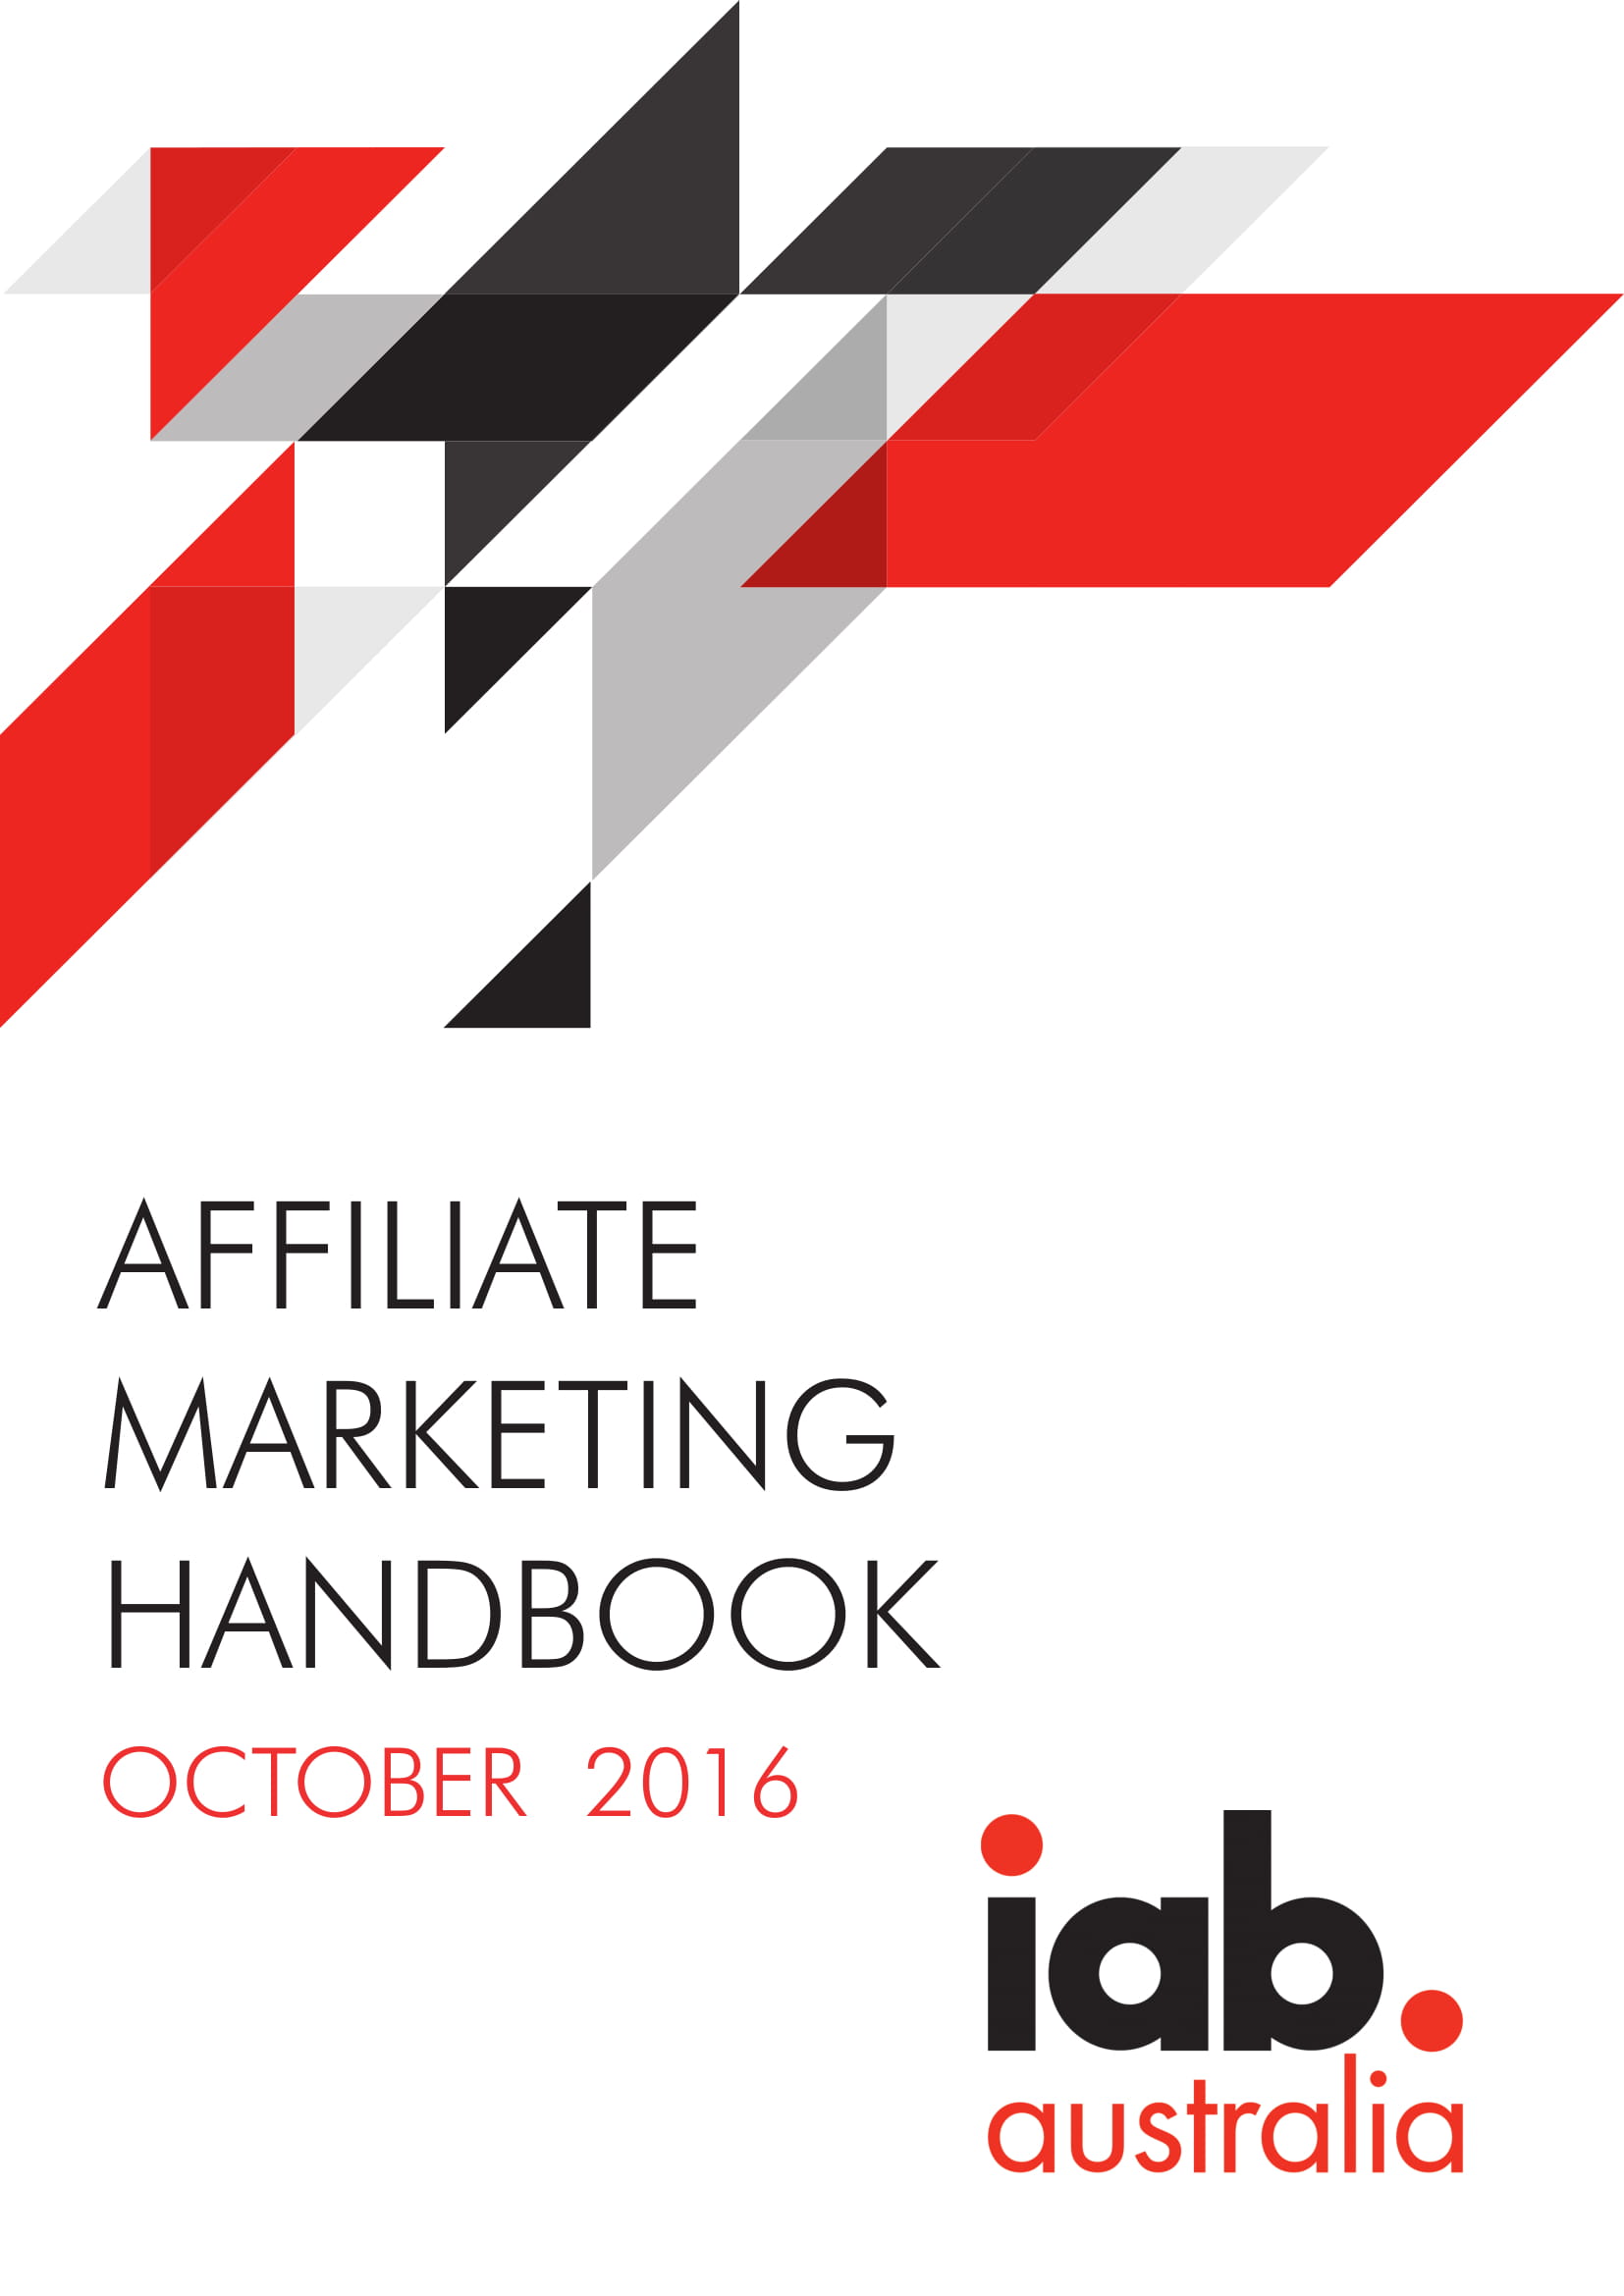 affiliate marketing handbook for strategic business planning example 01